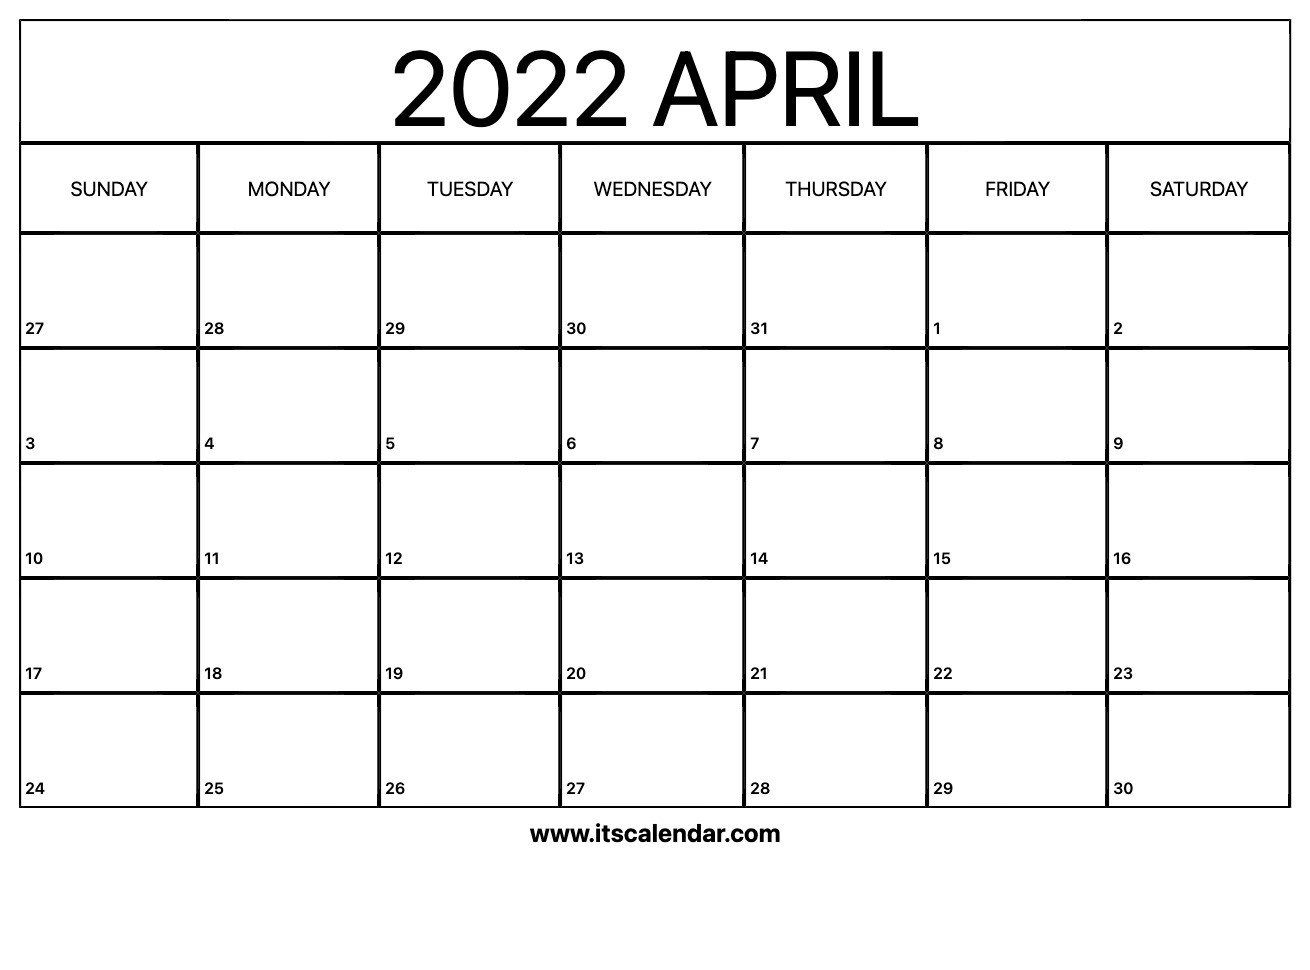 Free Printable April 2022 Calendar  Calendar 2022 January February March April